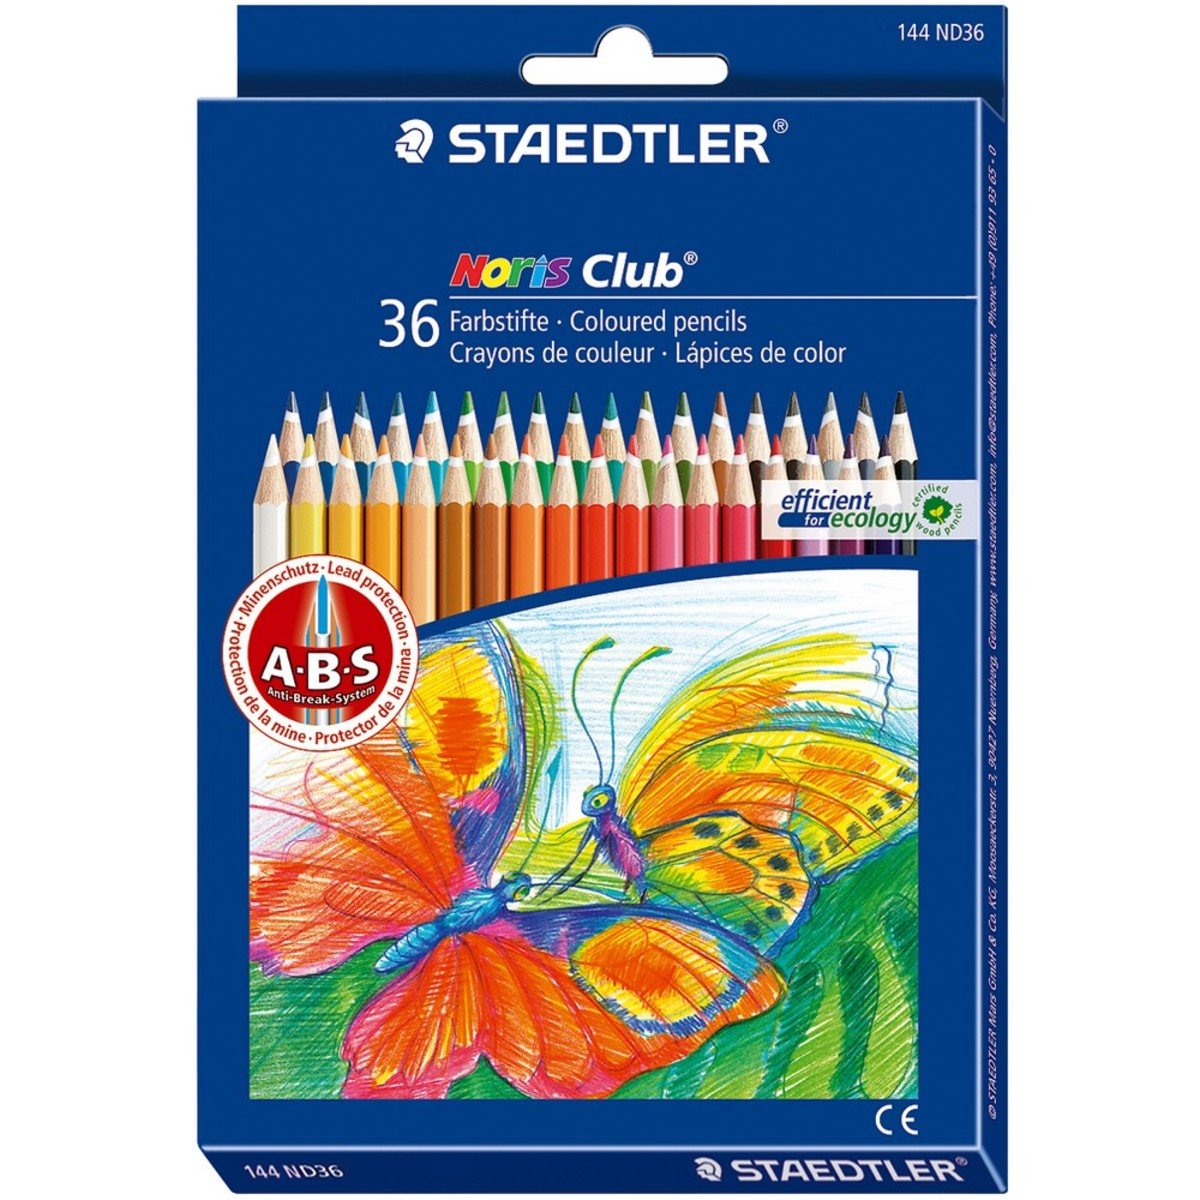 Staedtler Noris Club Color Pencil 144ND36 36 piece